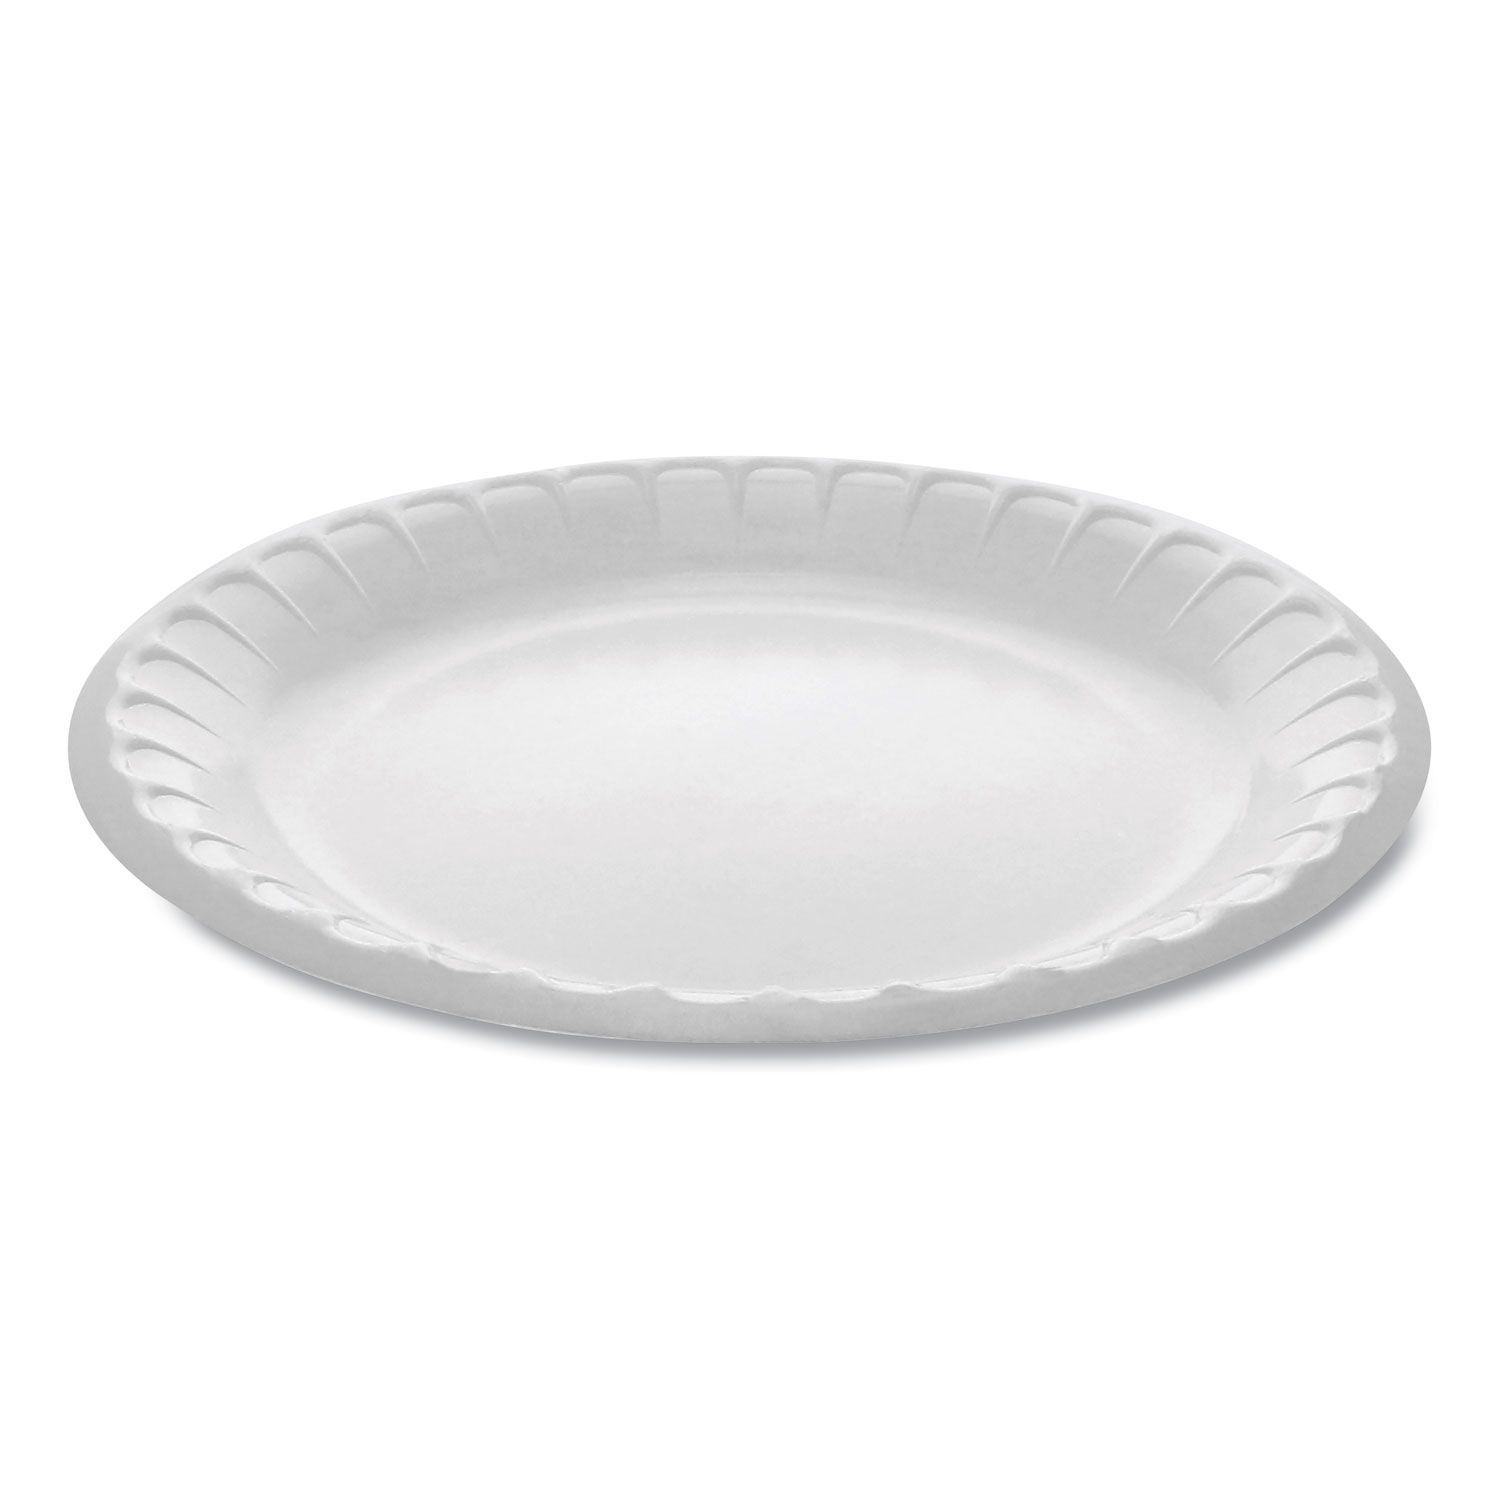  Pactiv YTK100090000 Laminated Foam Dinnerware, Plate, 8.88 Diameter, White, 500/Carton (PCTYTK100090000) 